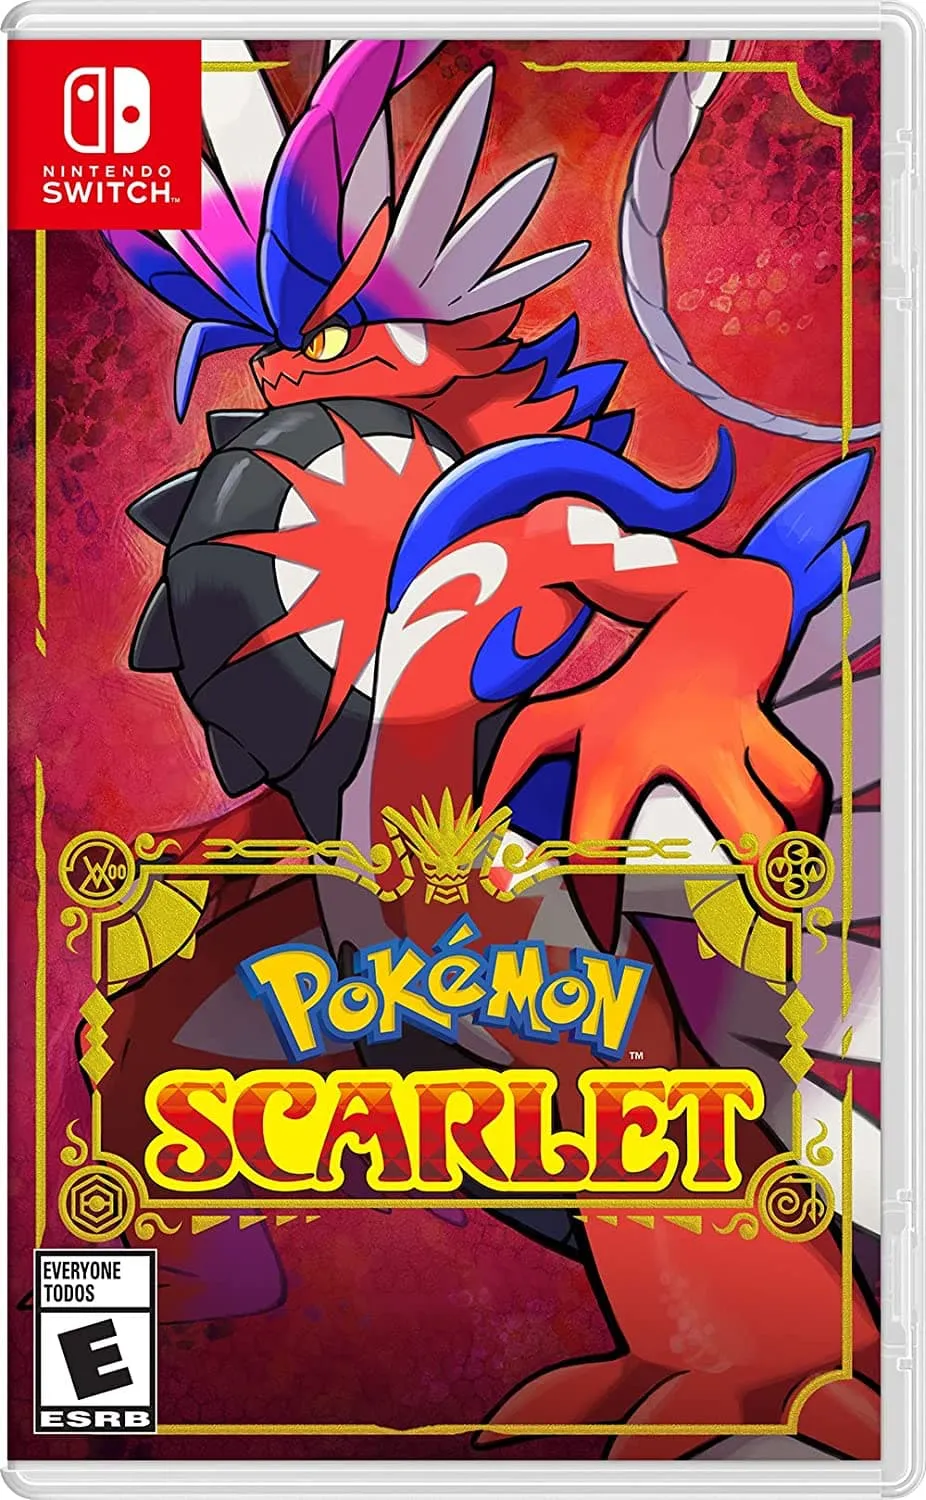 Pokémon Scarlet Nintendo Switchi albumi kujundus.